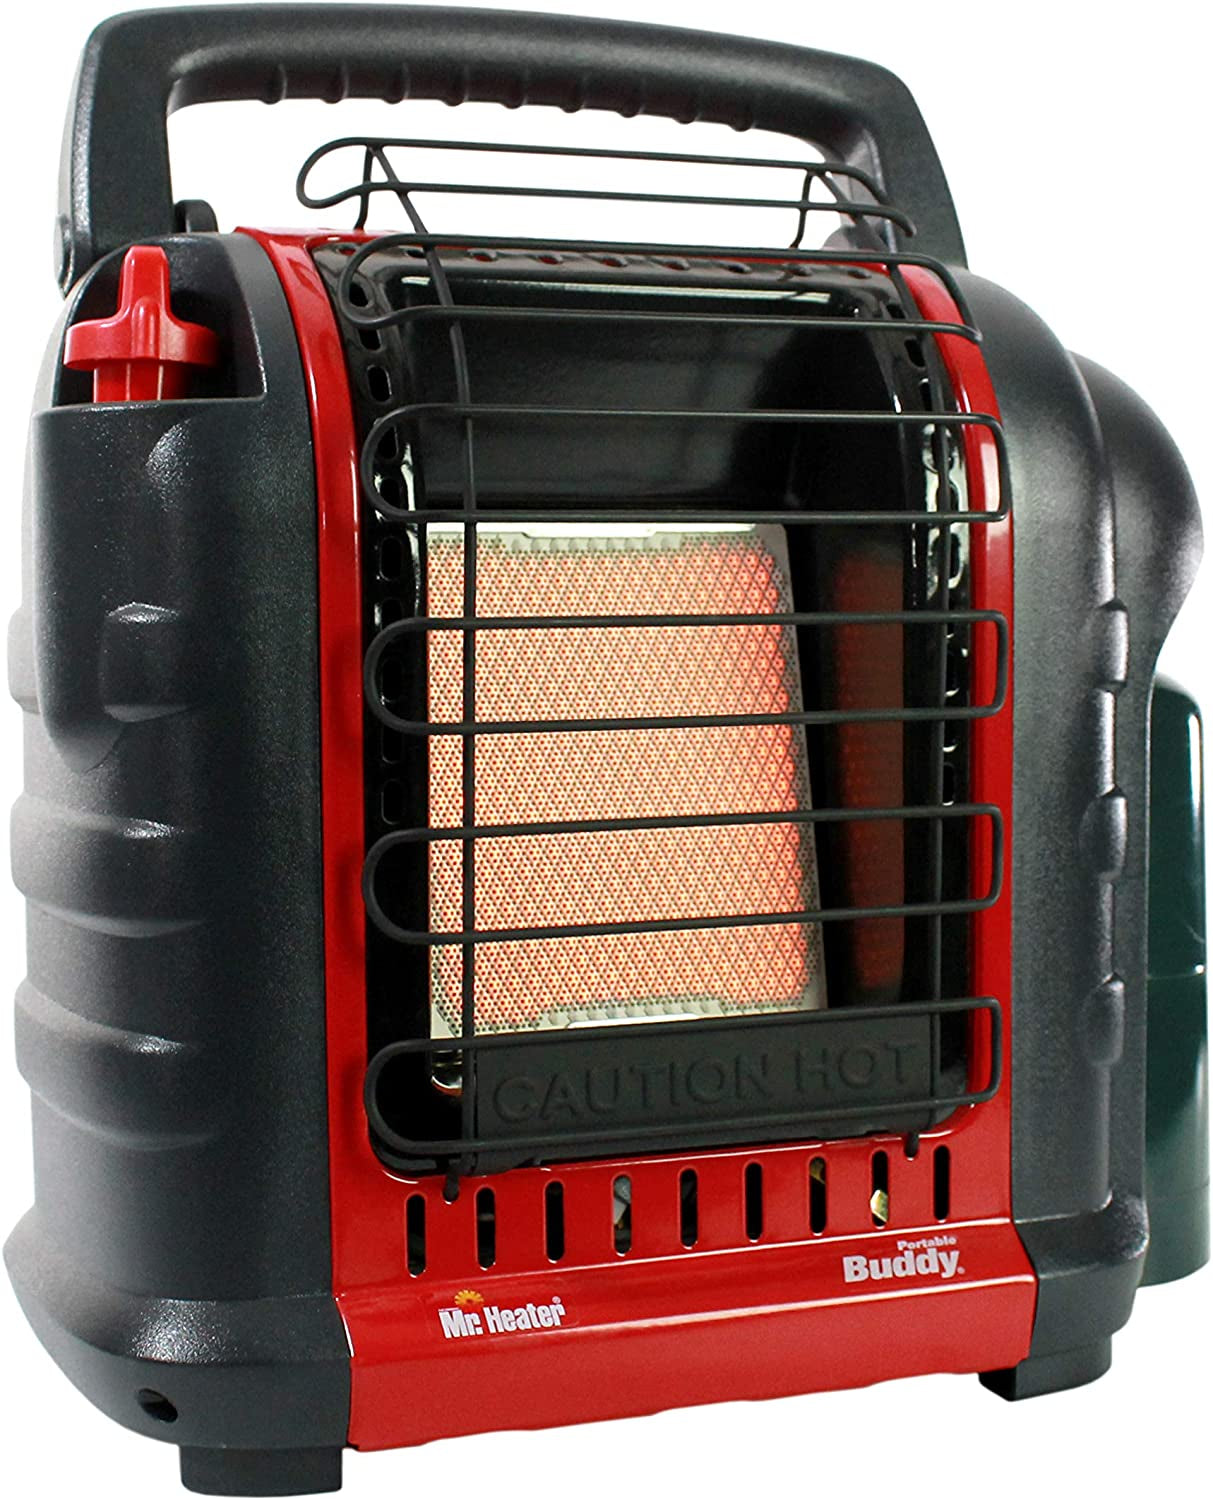 F232000 MH9BX Buddy 4,000-9,000-BTU Indoor-Safe Portable Propane Radiant Heater, Red-Black